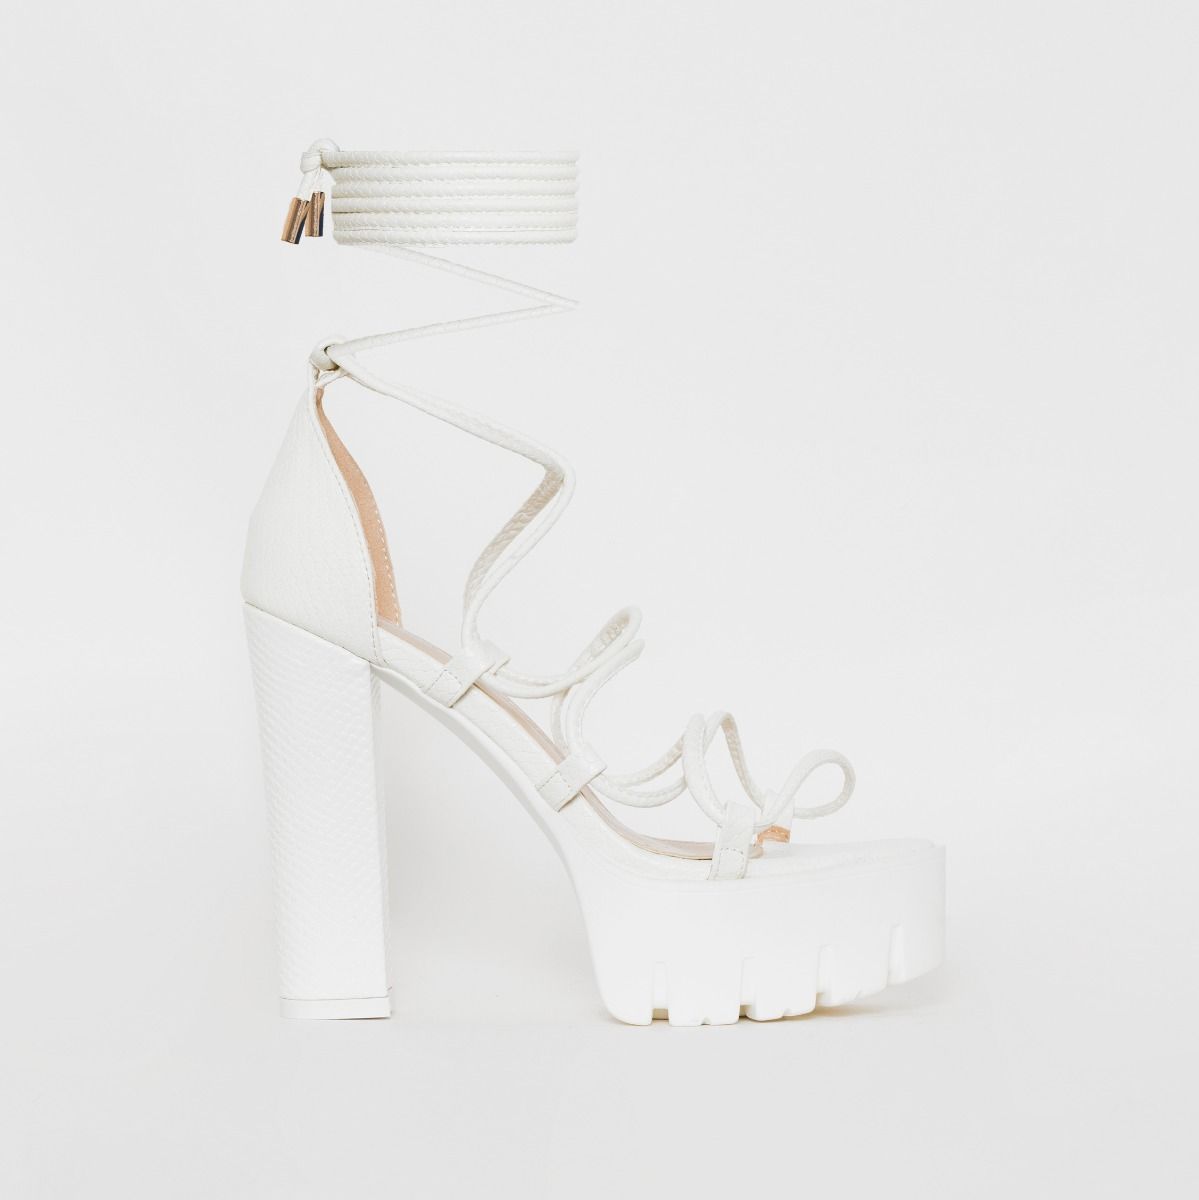 white chunky heels